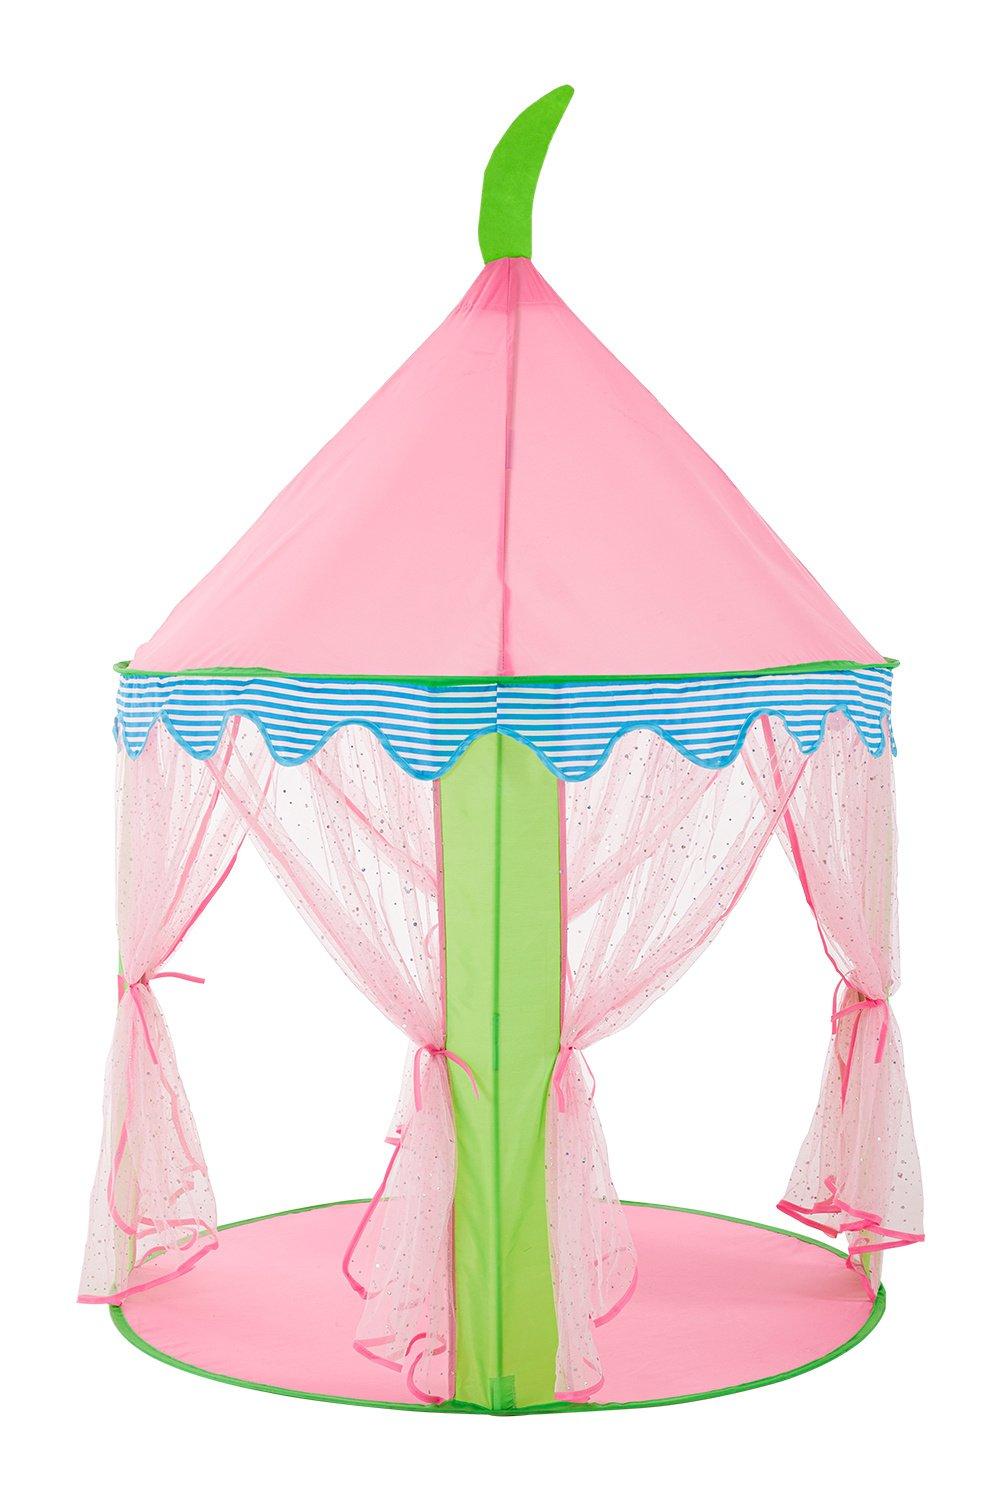 Princess Castle Pop up Play Tent for Little Girls